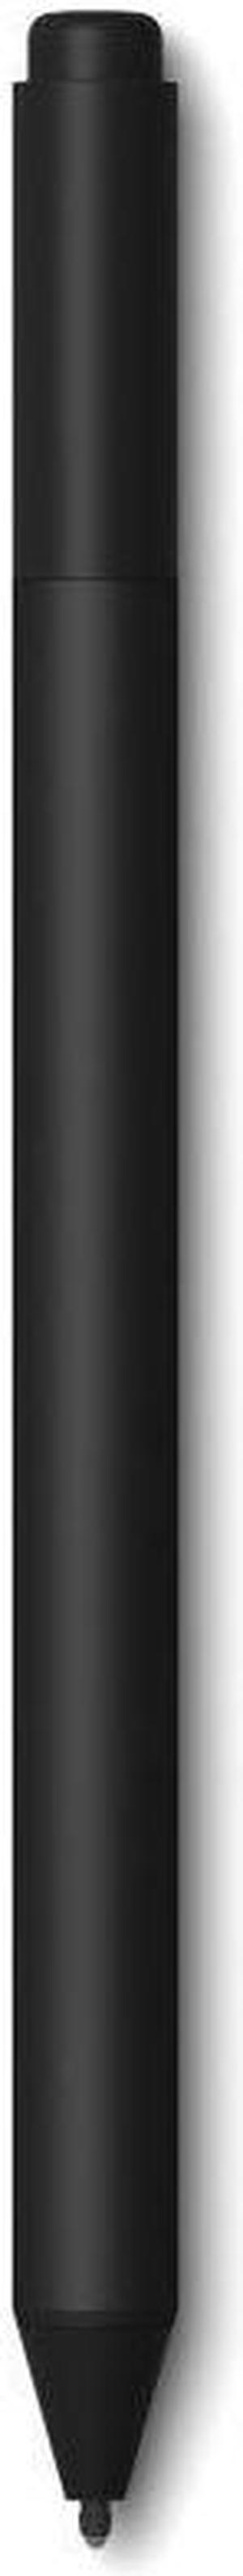 Microsoft Surface Pen M1776  Active stylus  2 buttons  Bluetooth 40  black  commercial